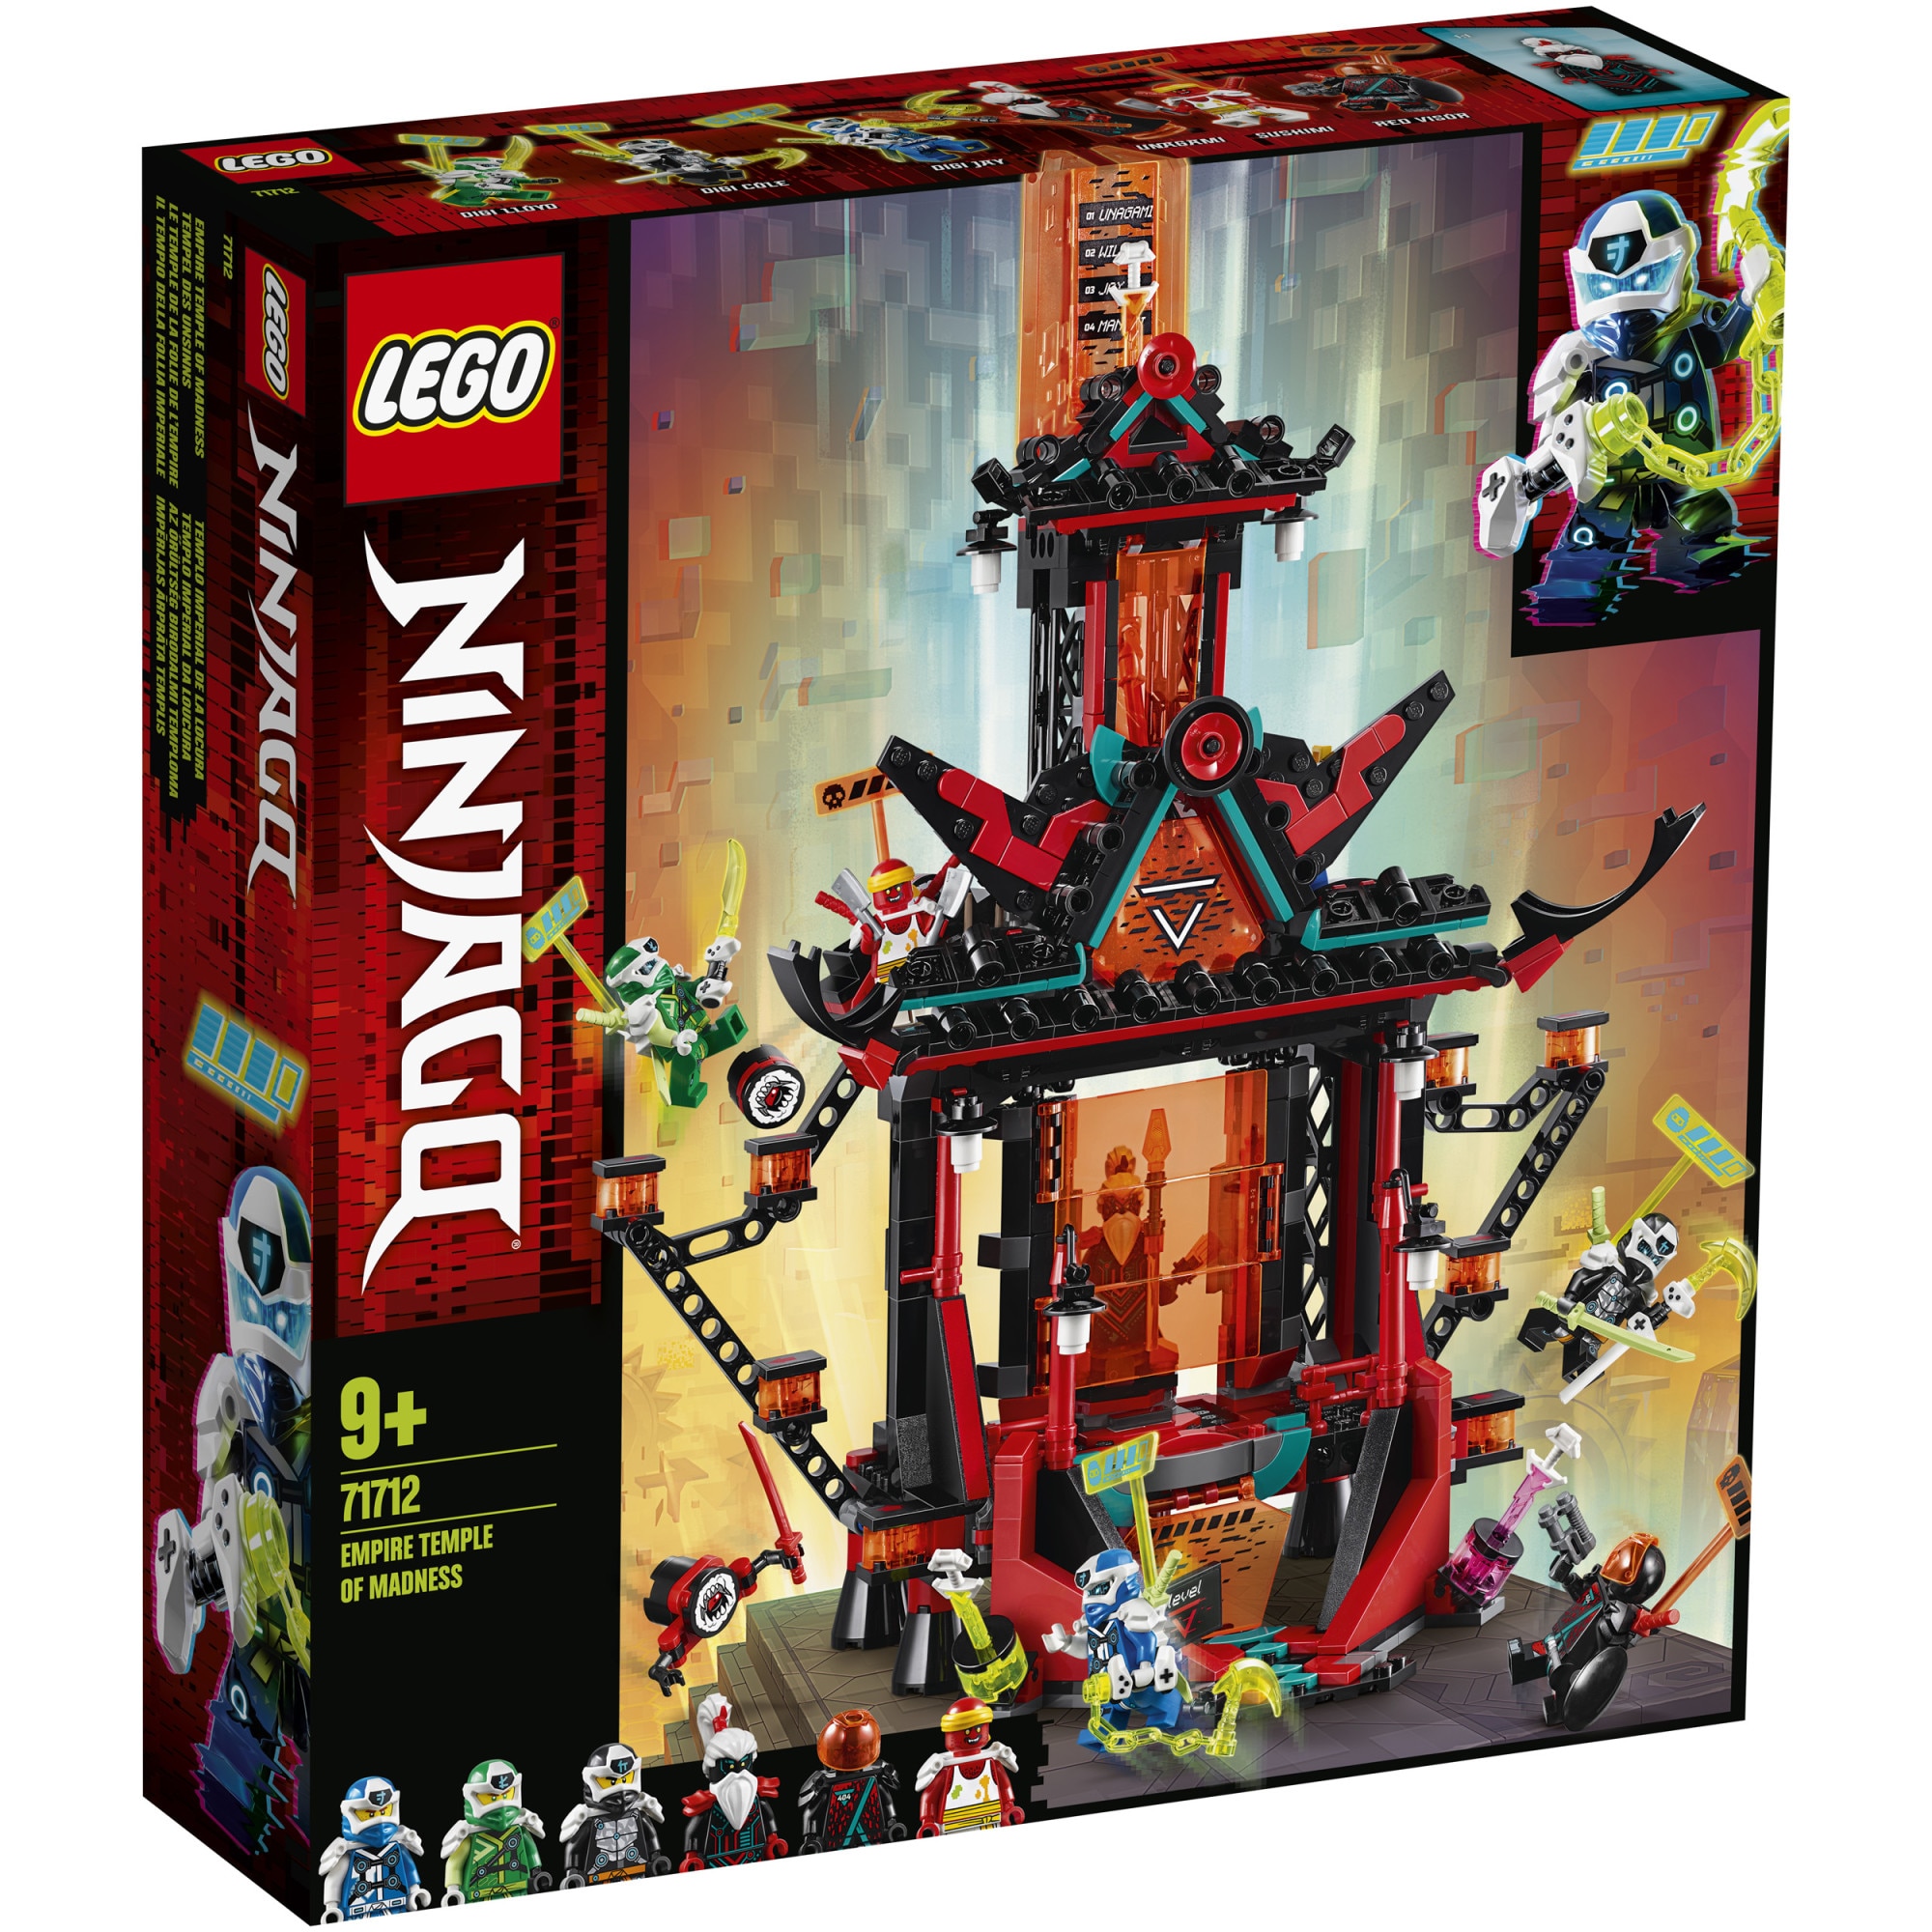 Make dinner Immorality punishment LEGO NINJAGO - Templul de nebunie al Imperiului 71712, 810 piese - eMAG.ro